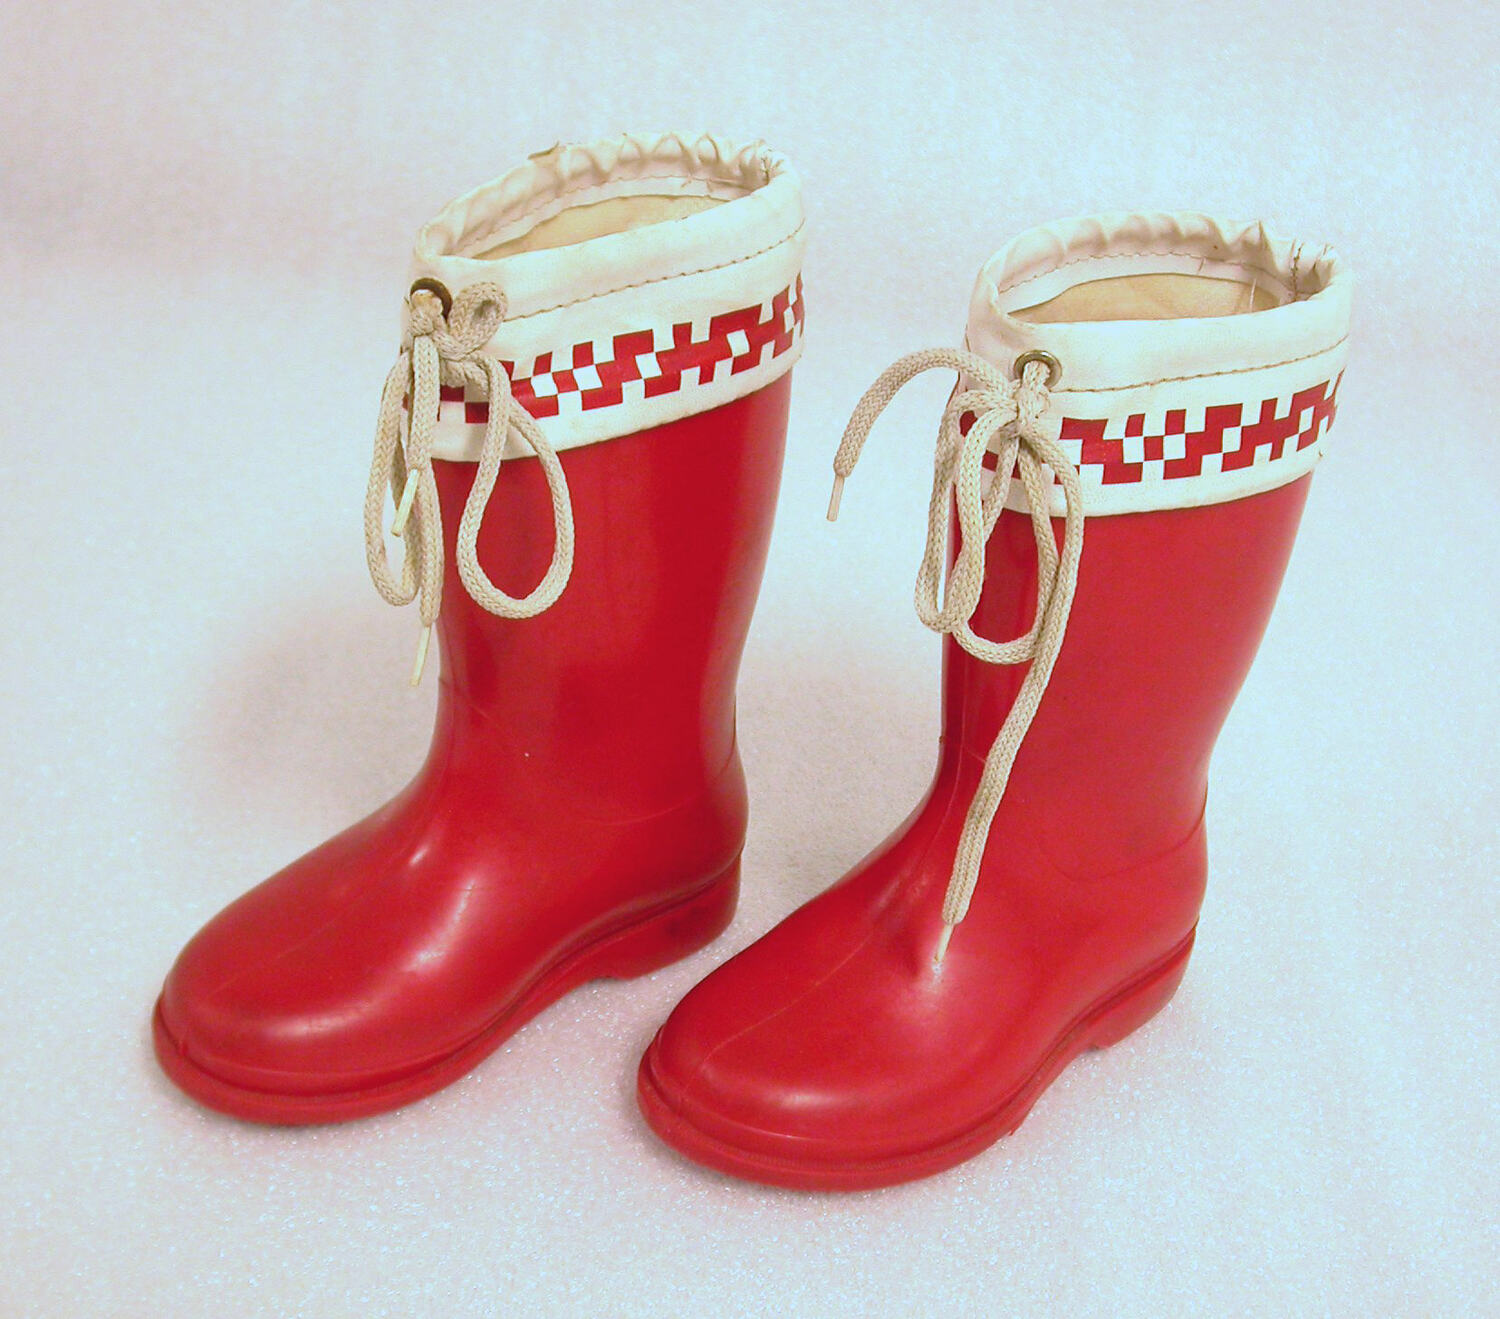 Gumboots - Red Plastic, Italian, late 1980s